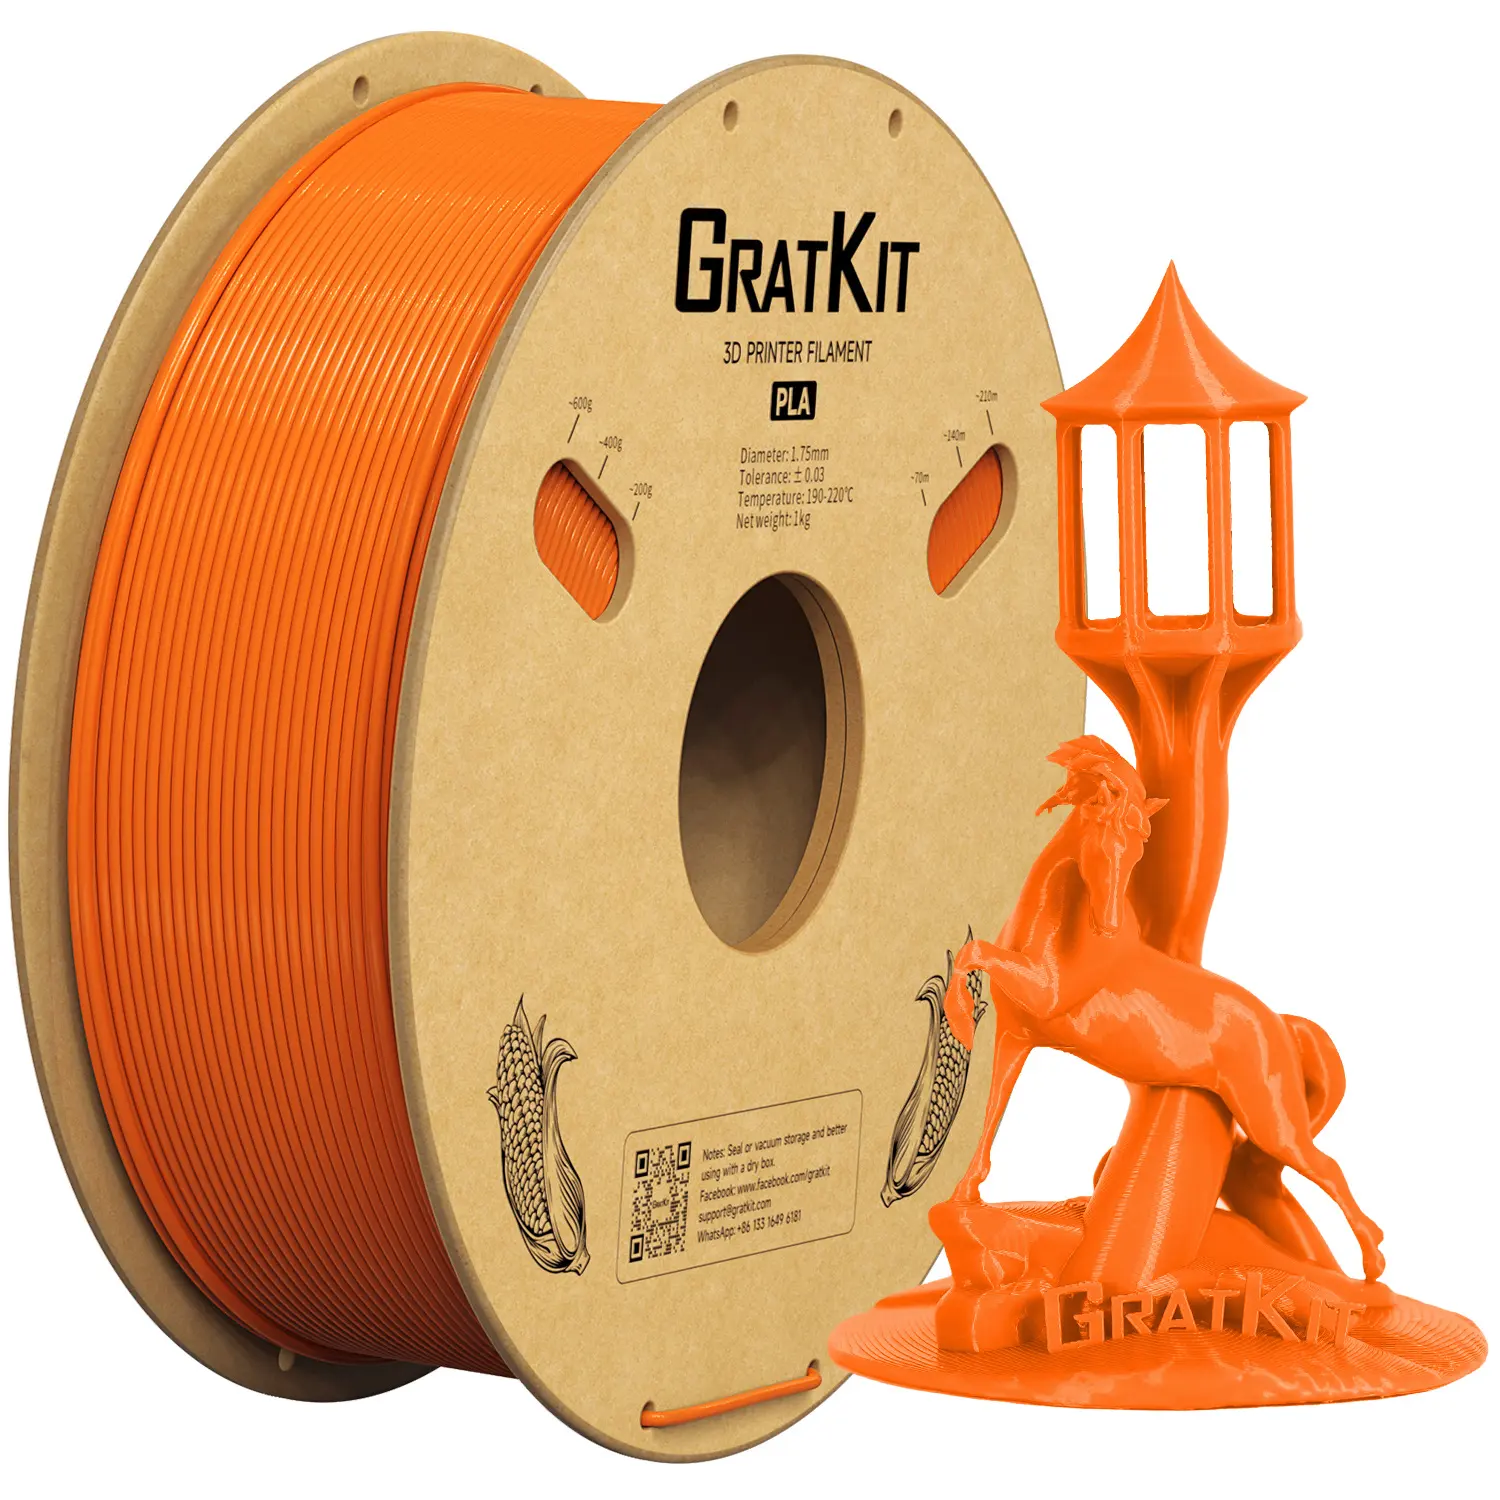 Gratkit PLA 3D printer Filament Cardboard Spool Low Density PLA | orange pla filament 1.75